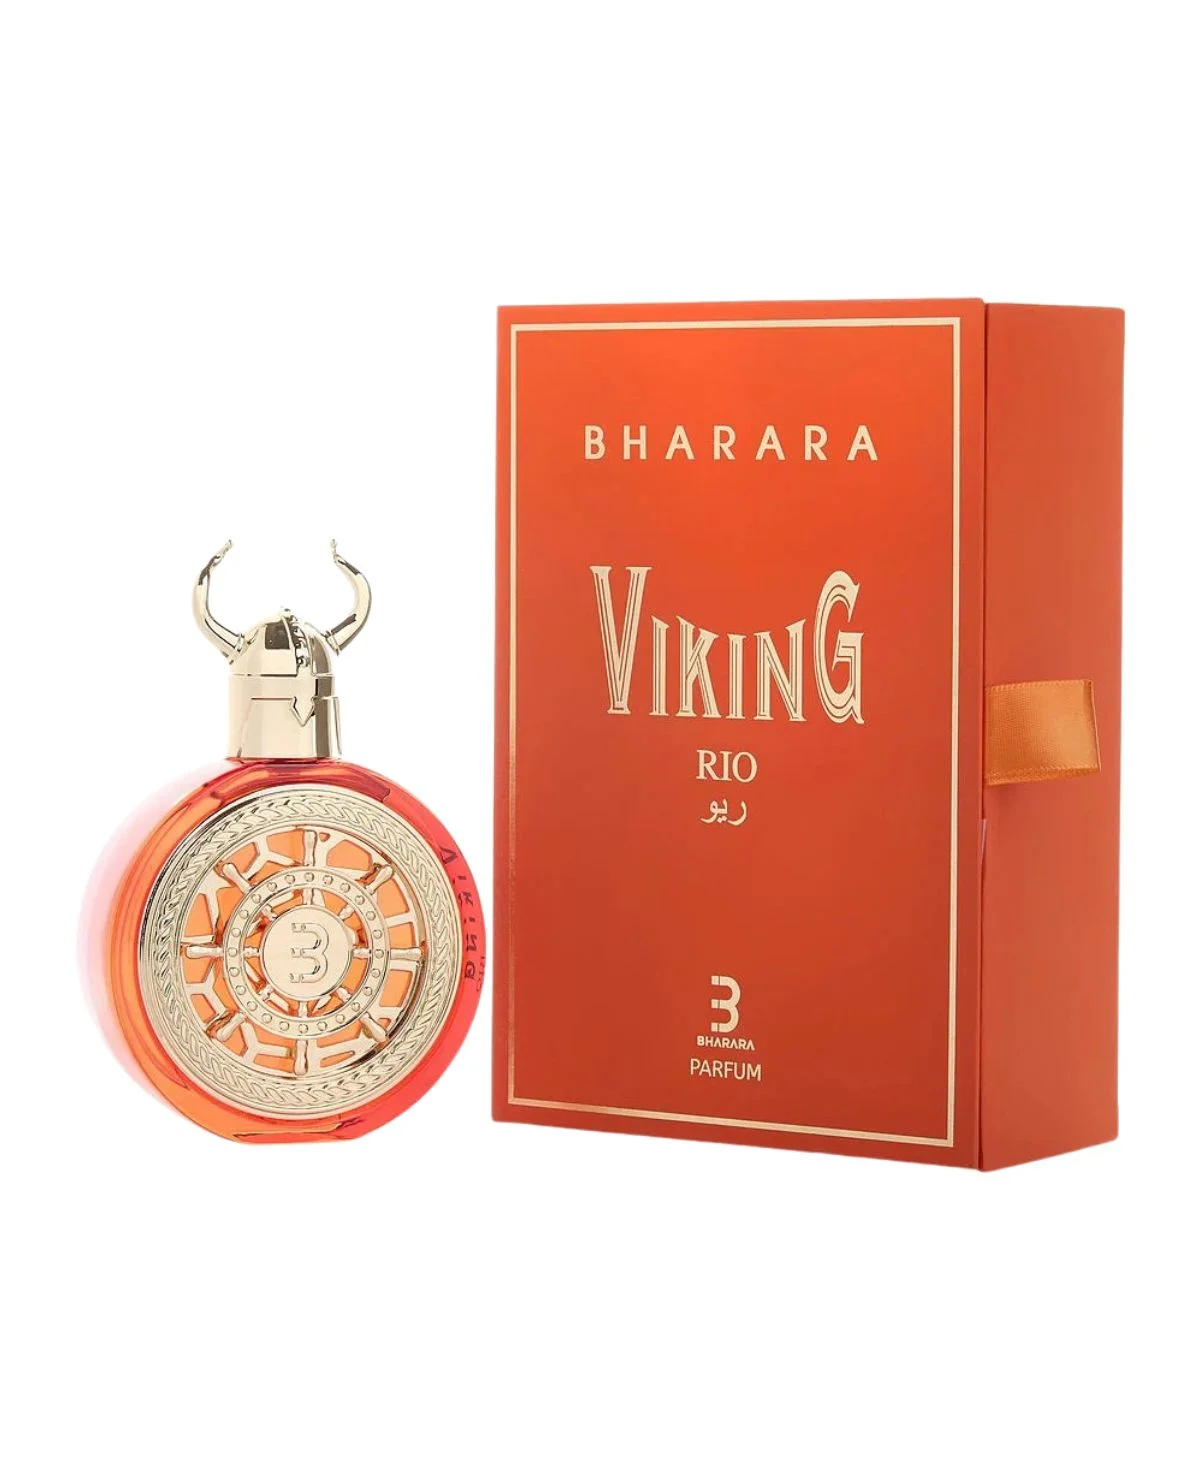 Bharara Viking Rio for Unisex Eau de Parfum (EDP) Spray 3.4 oz (100 ml) 850050062219